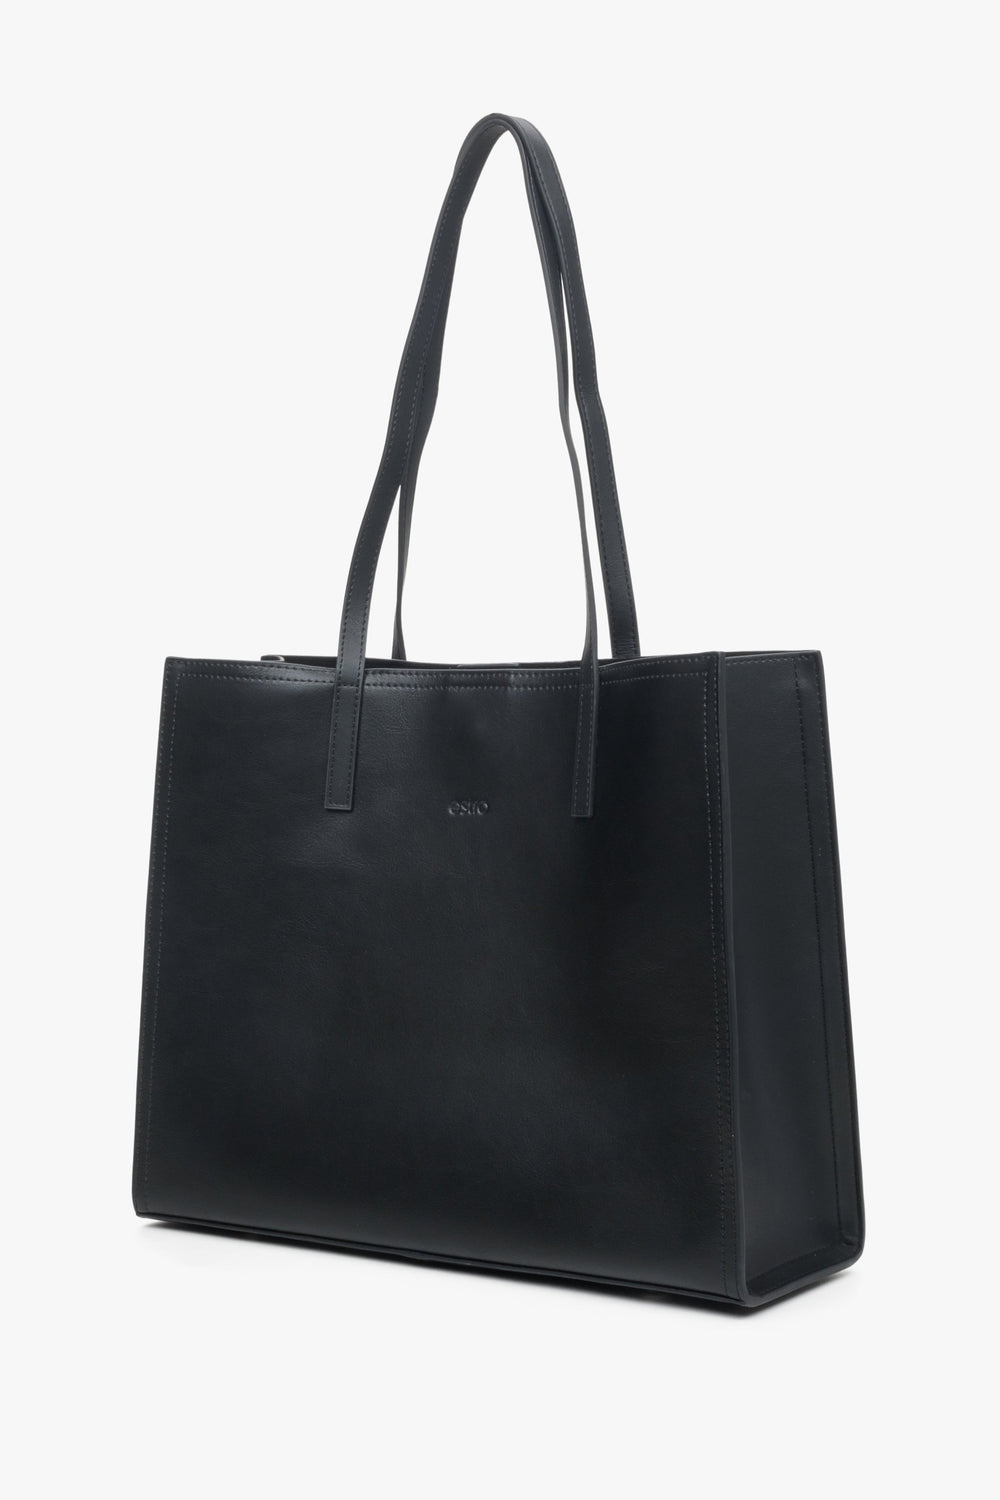 Women's black shopper bag made of genuine leather by Estro.